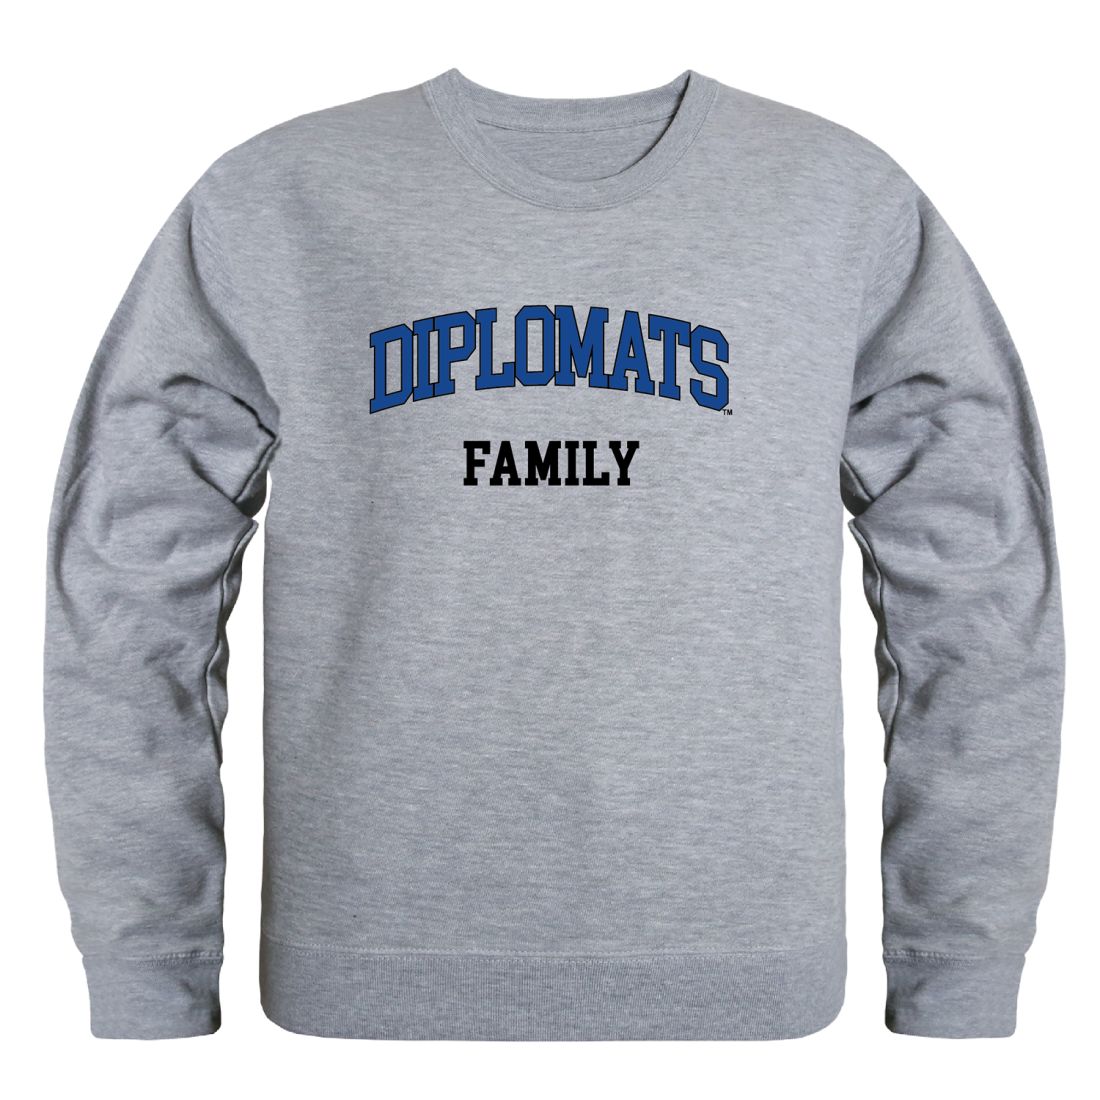 Franklin-&-Marshall-College-Diplomats-Family-Fleece-Crewneck-Pullover-Sweatshirt